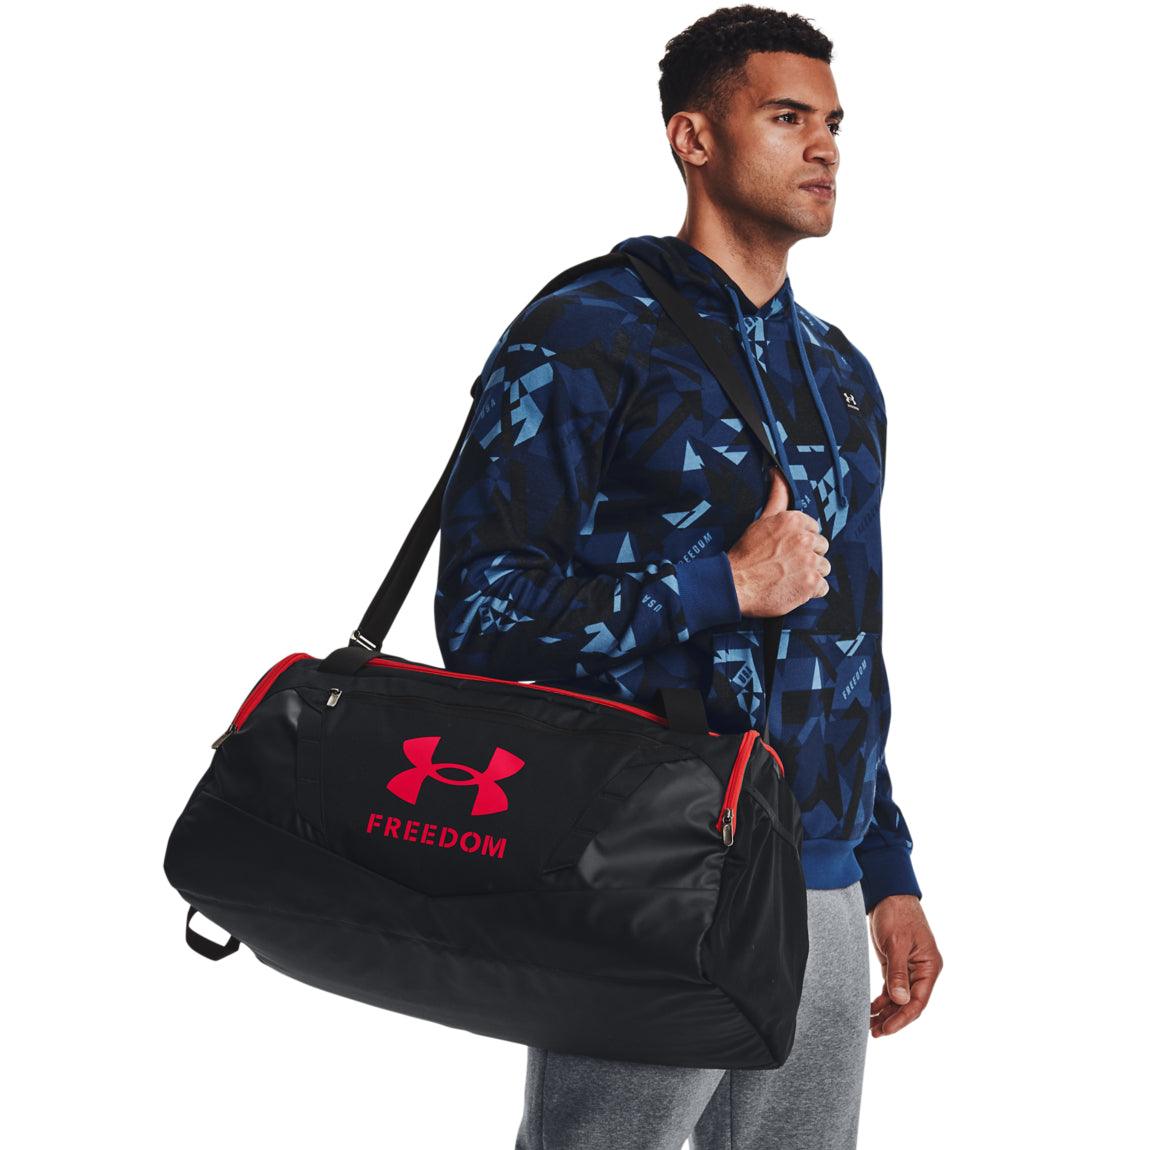 Under Armour UA Contain Duo SM Duffle Sports Bag : Amazon.de: Sports &  Outdoors